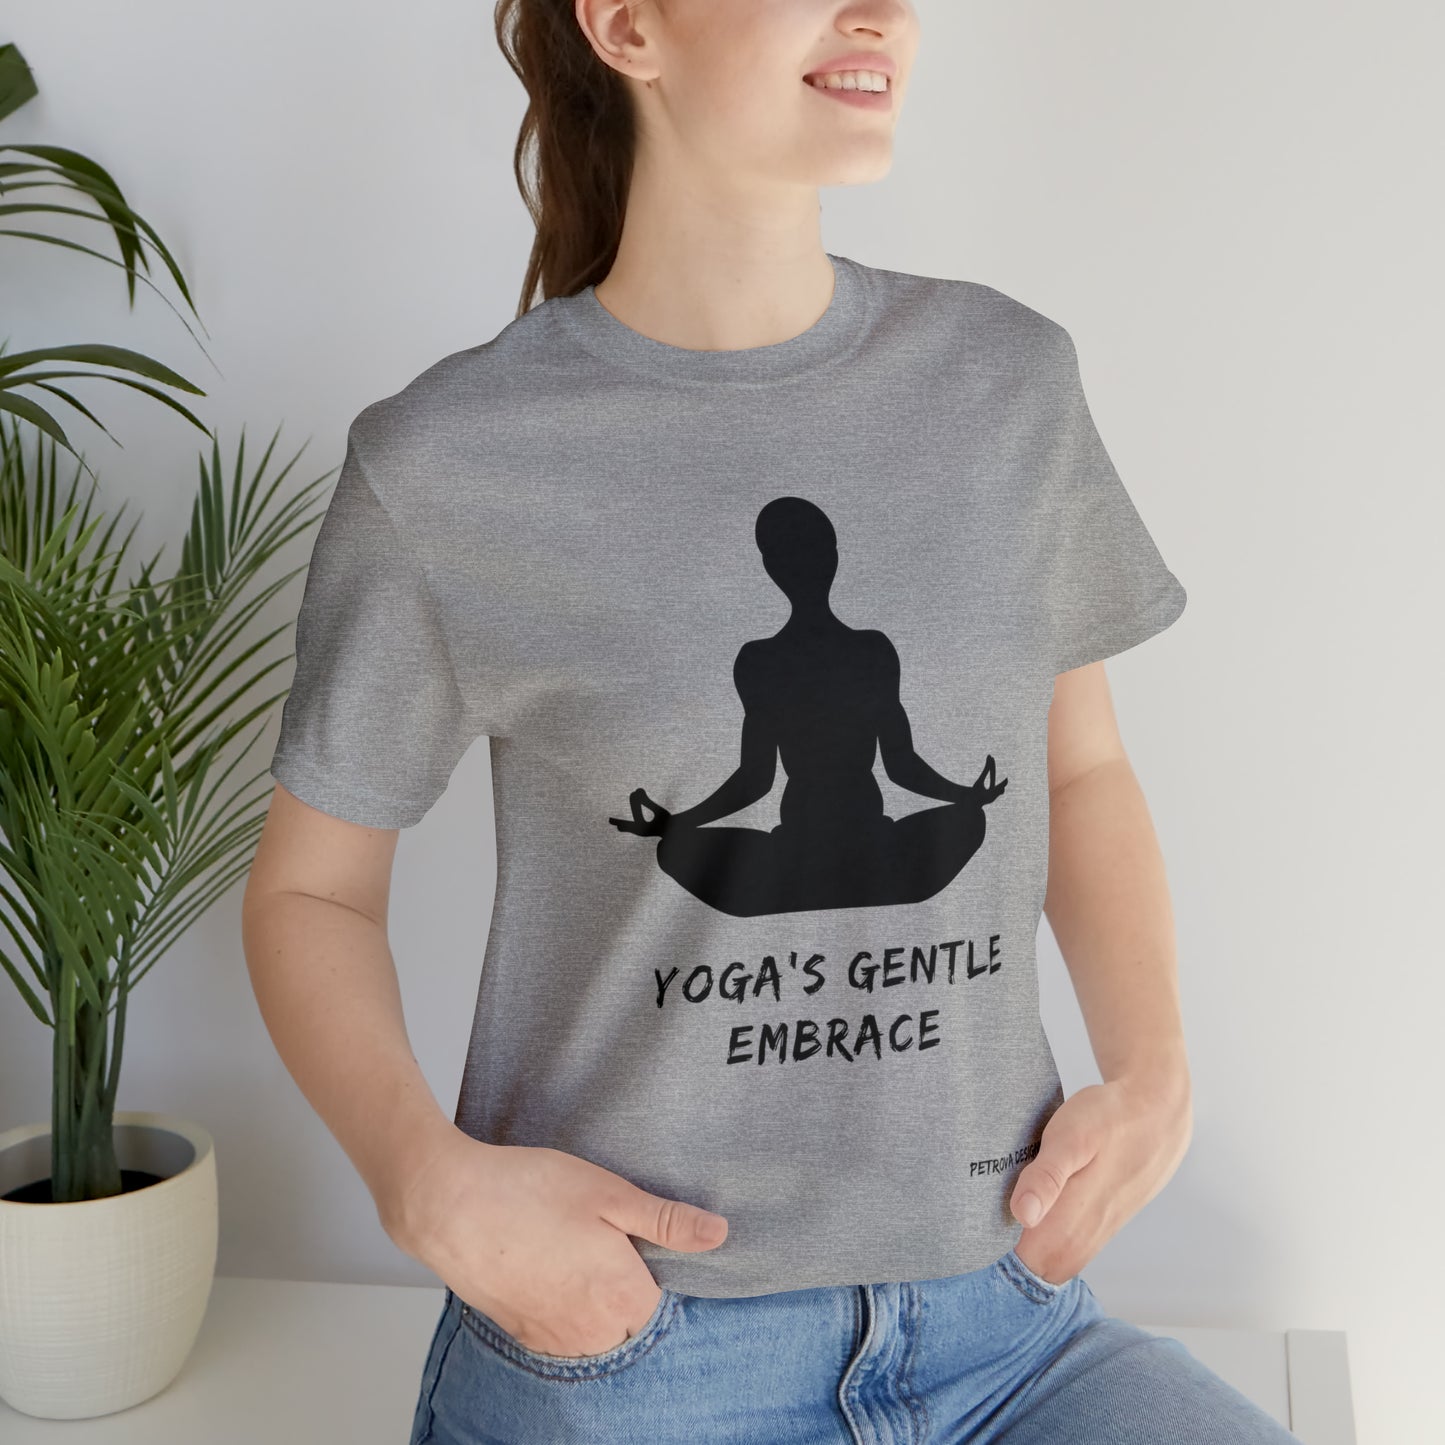 Yoga T-Shirt | For Yoga Lovers T-Shirt Petrova Designs